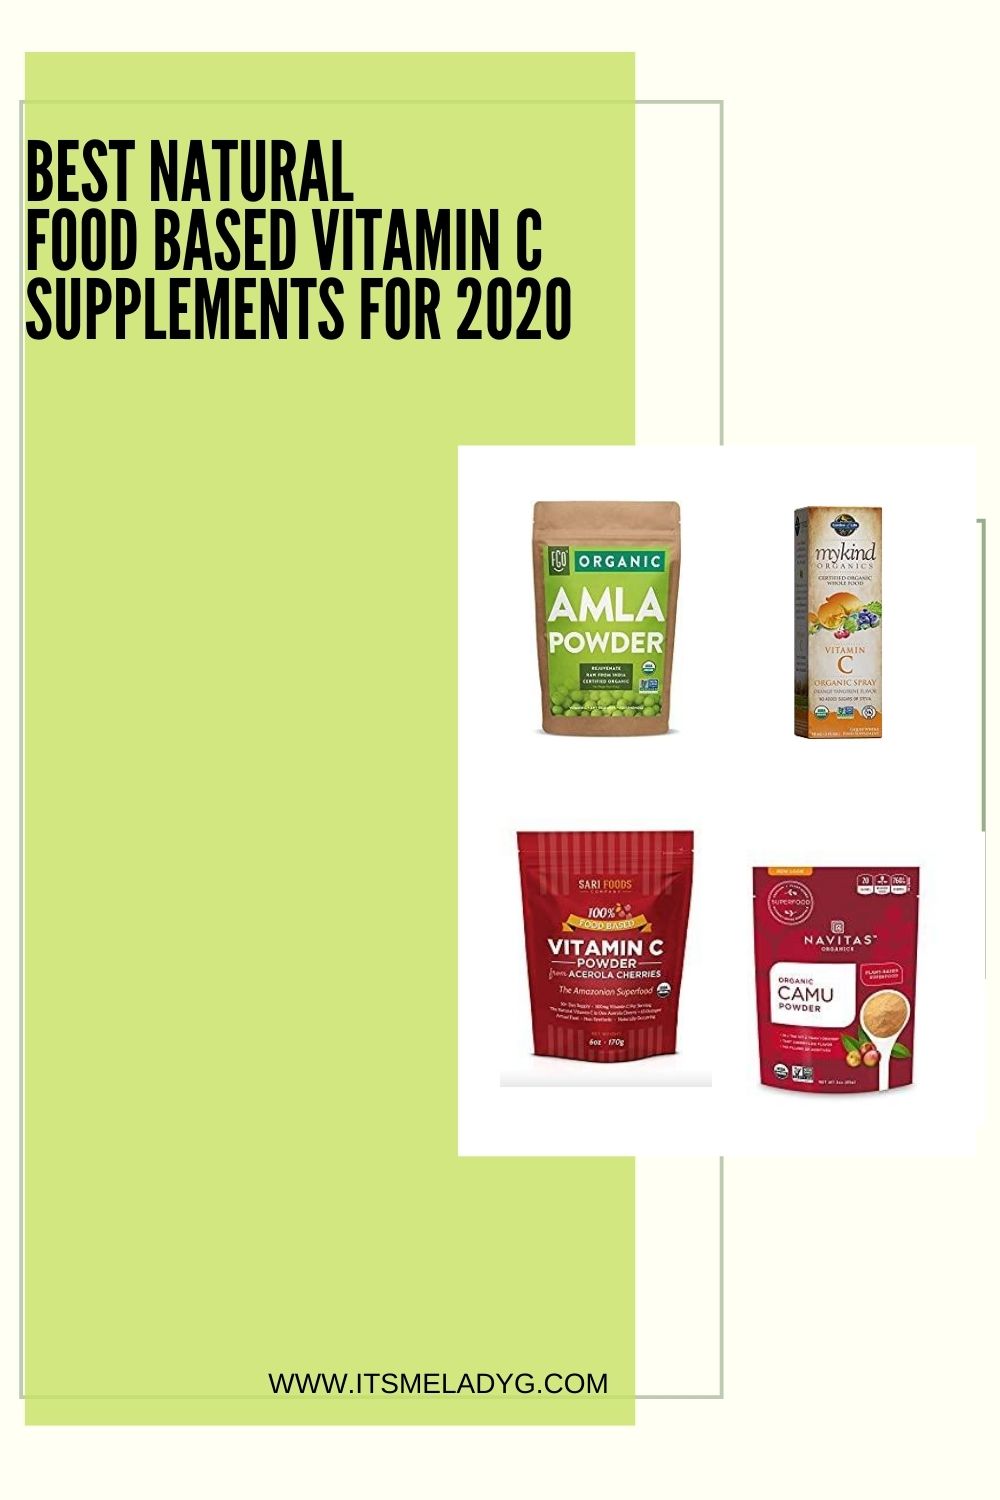 BEST-natural-food-based-vitamin-c-supplements-2020